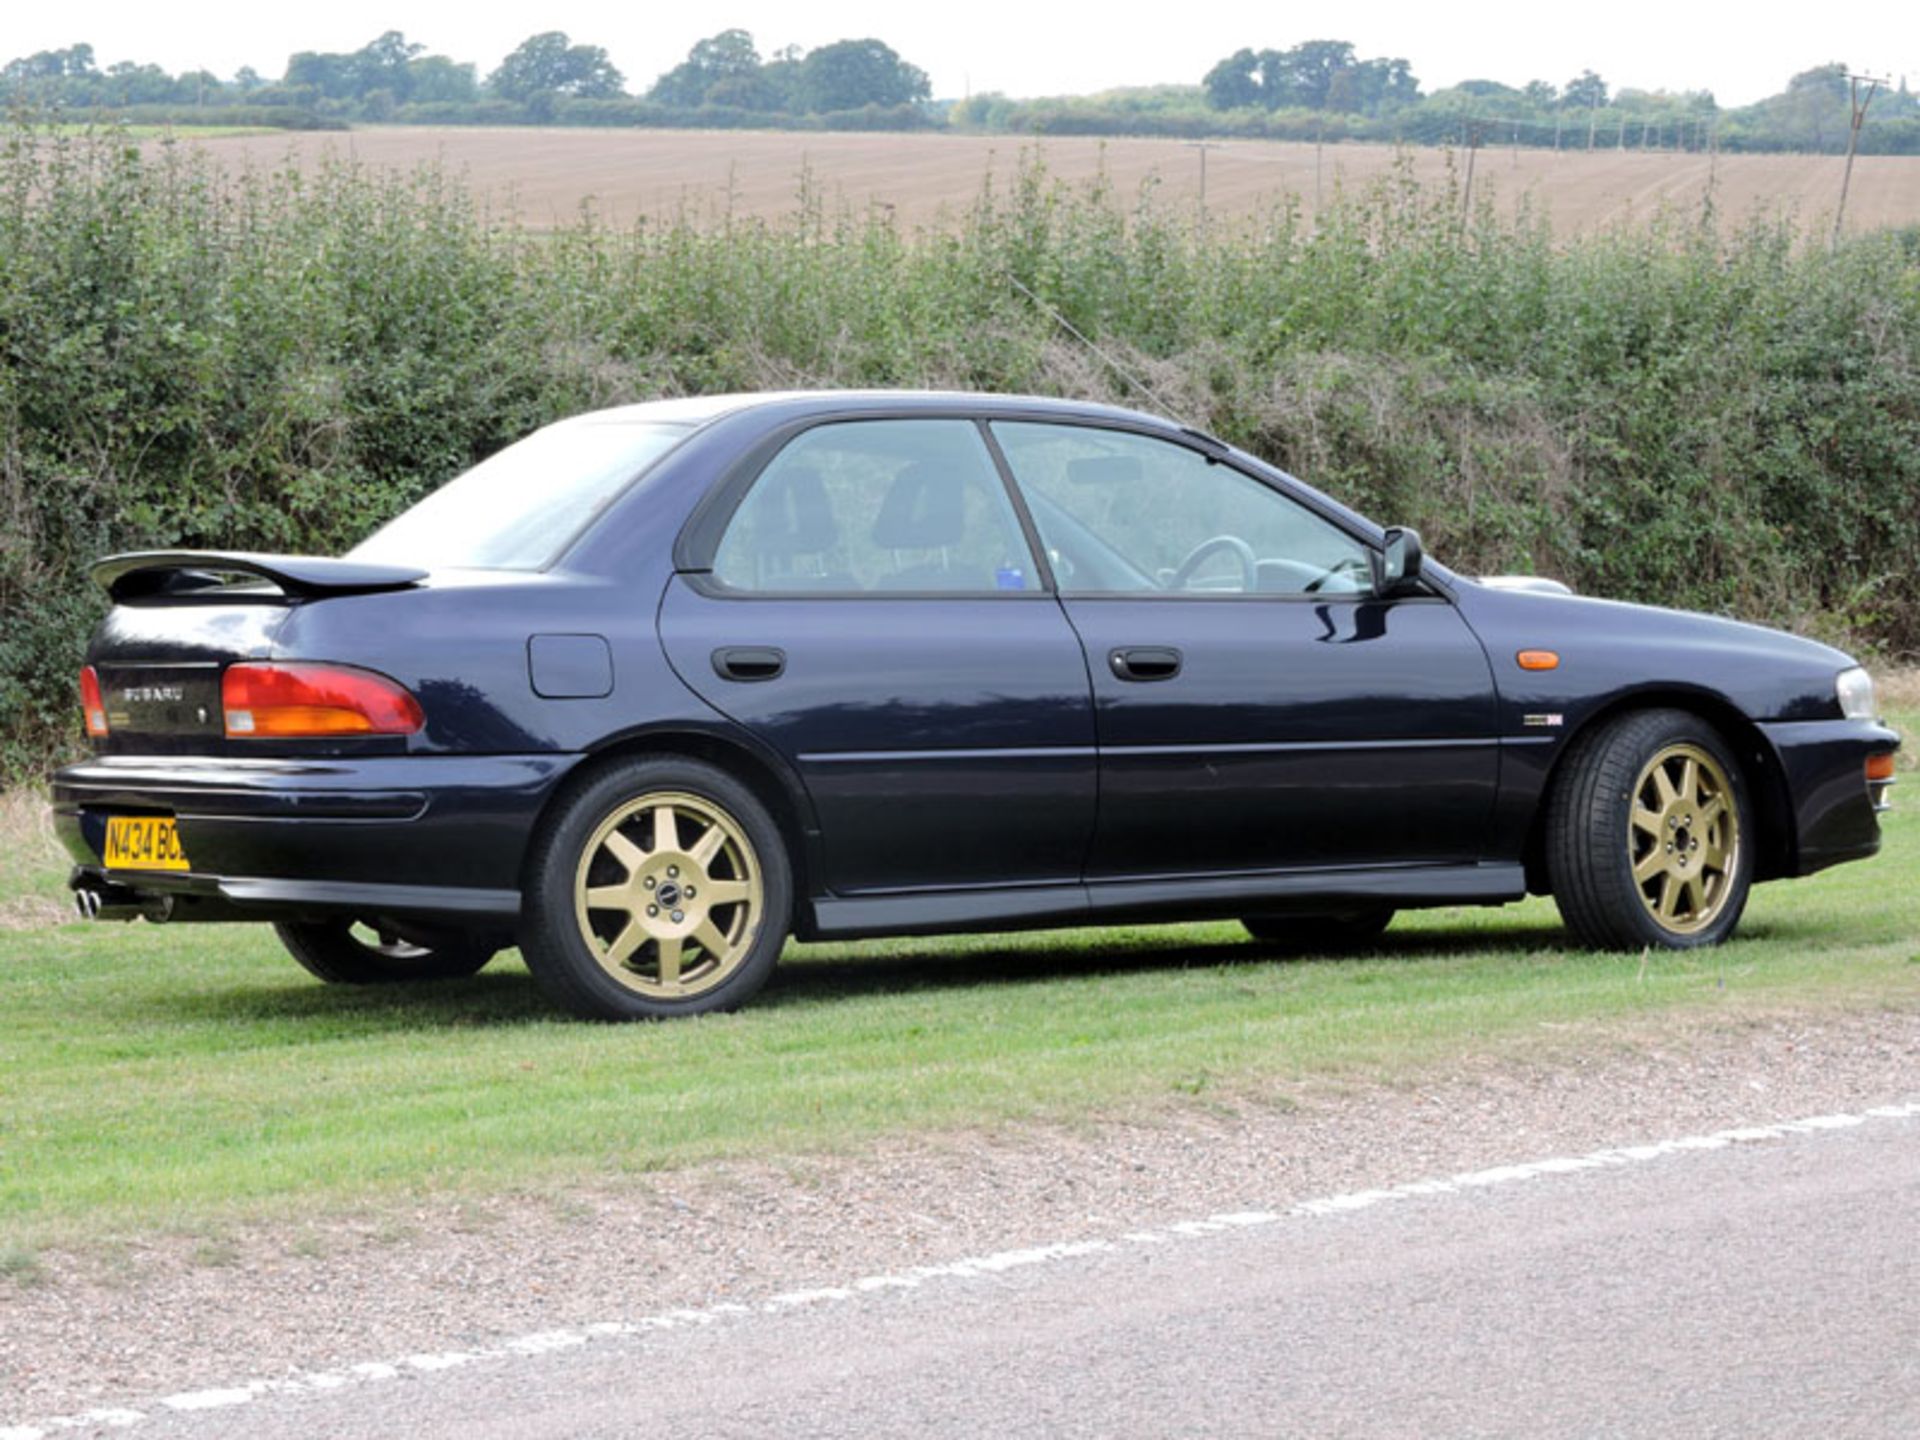 1995 Subaru Impreza Series McRae - Image 8 of 8